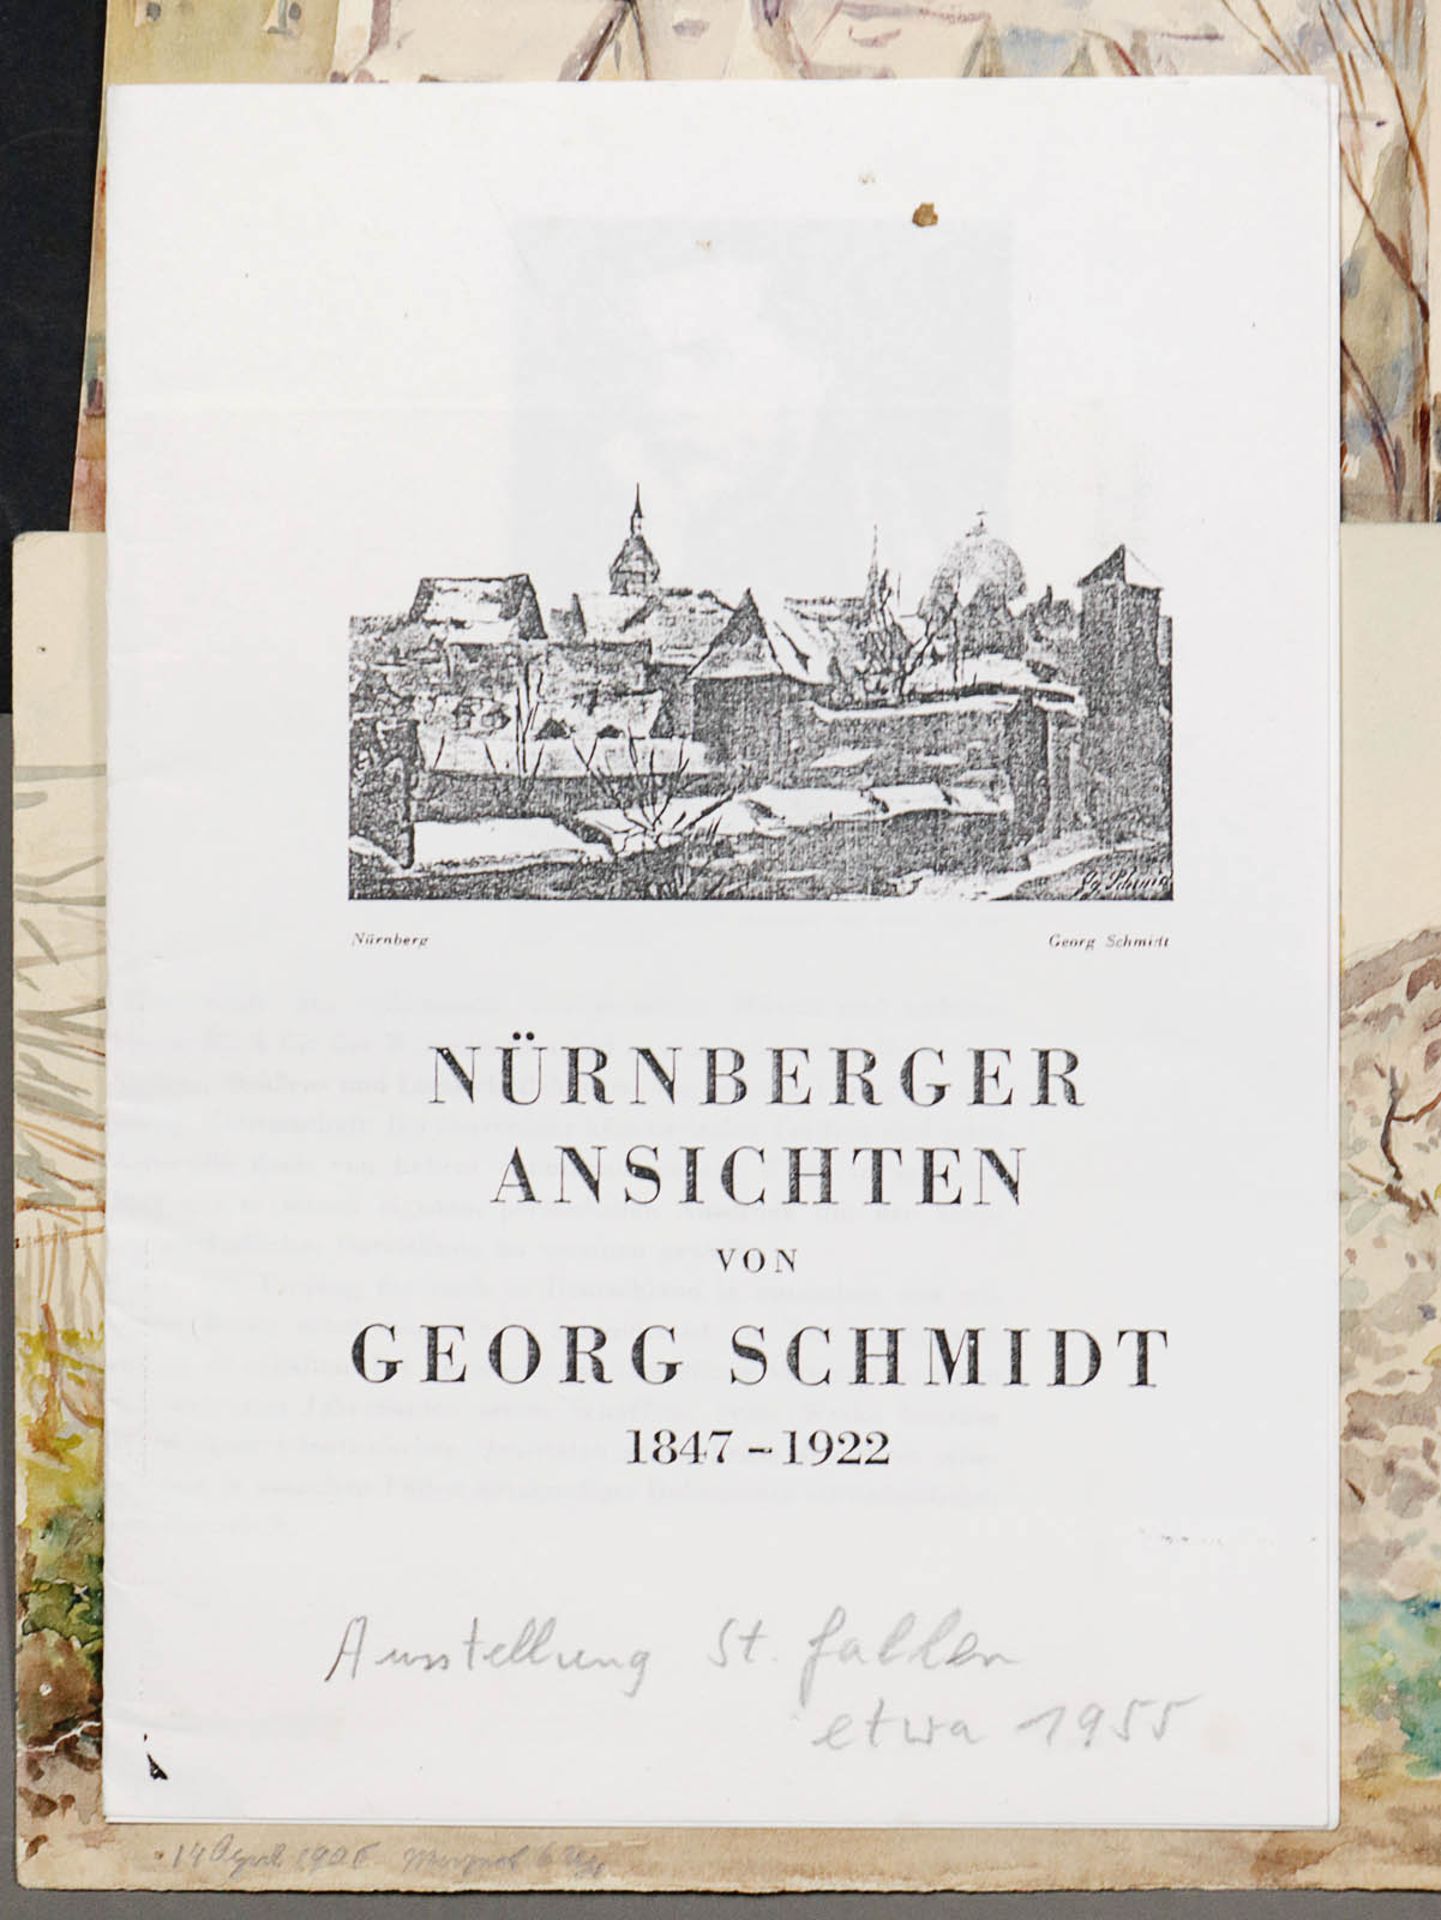 Schmidt, Georg - Nachlass - Image 2 of 9